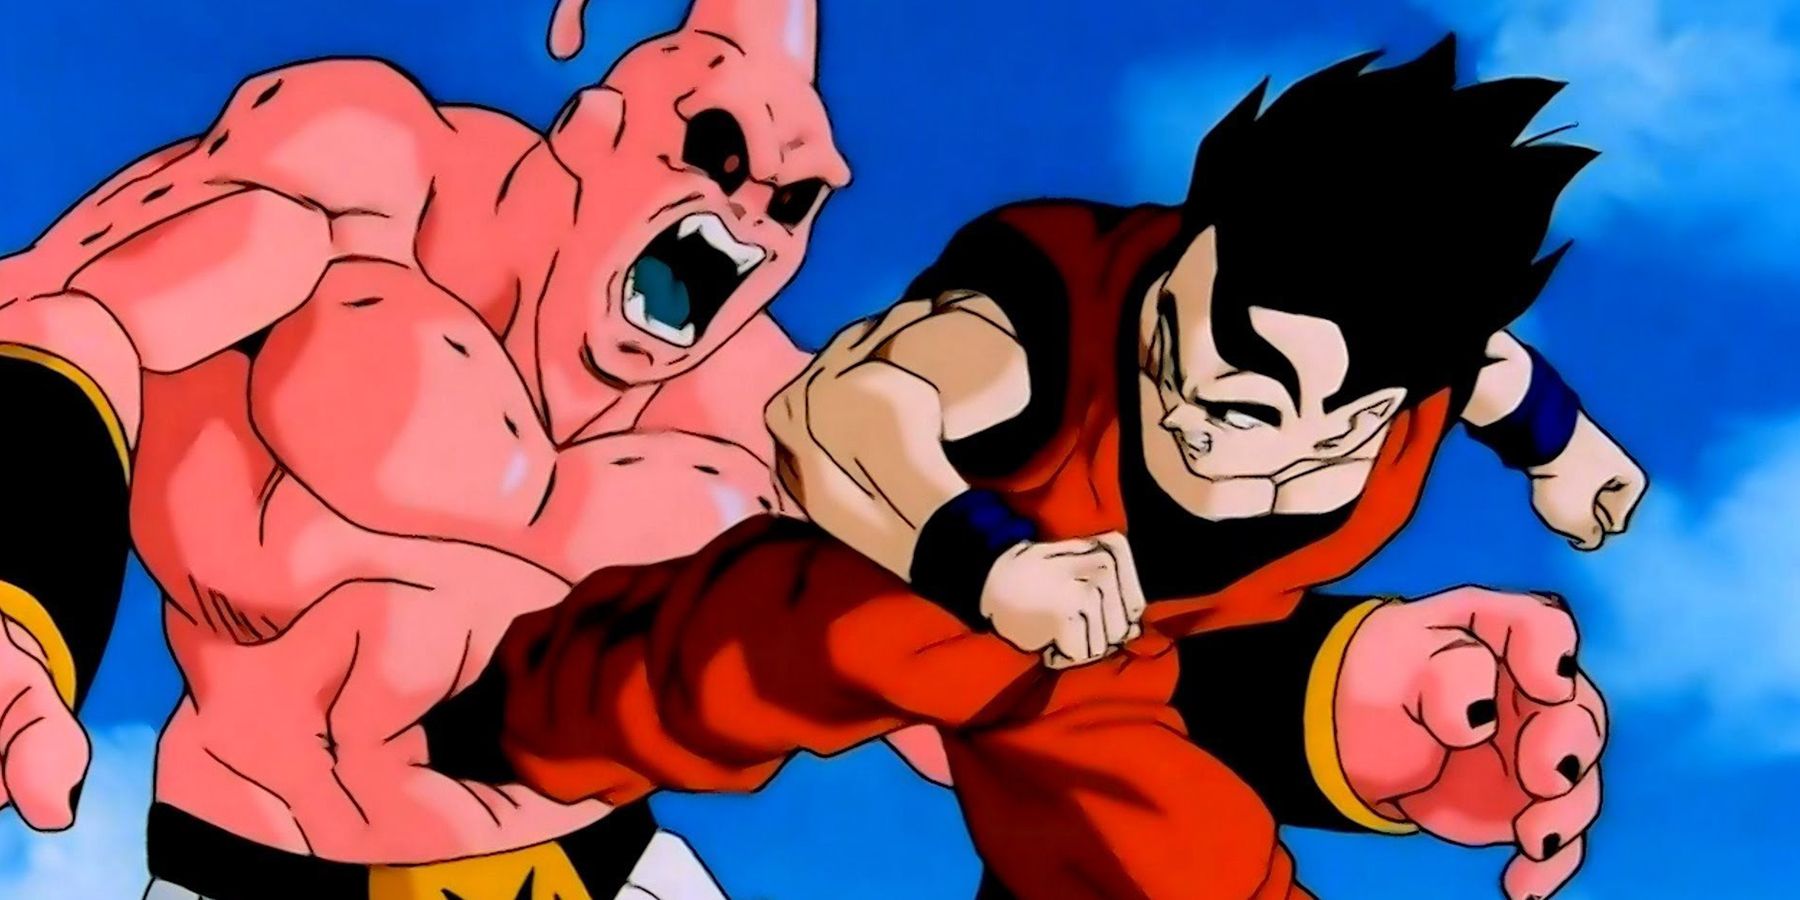 Ultimate Gohan kicks Super Buu in the gut in Dragon Ball Z.